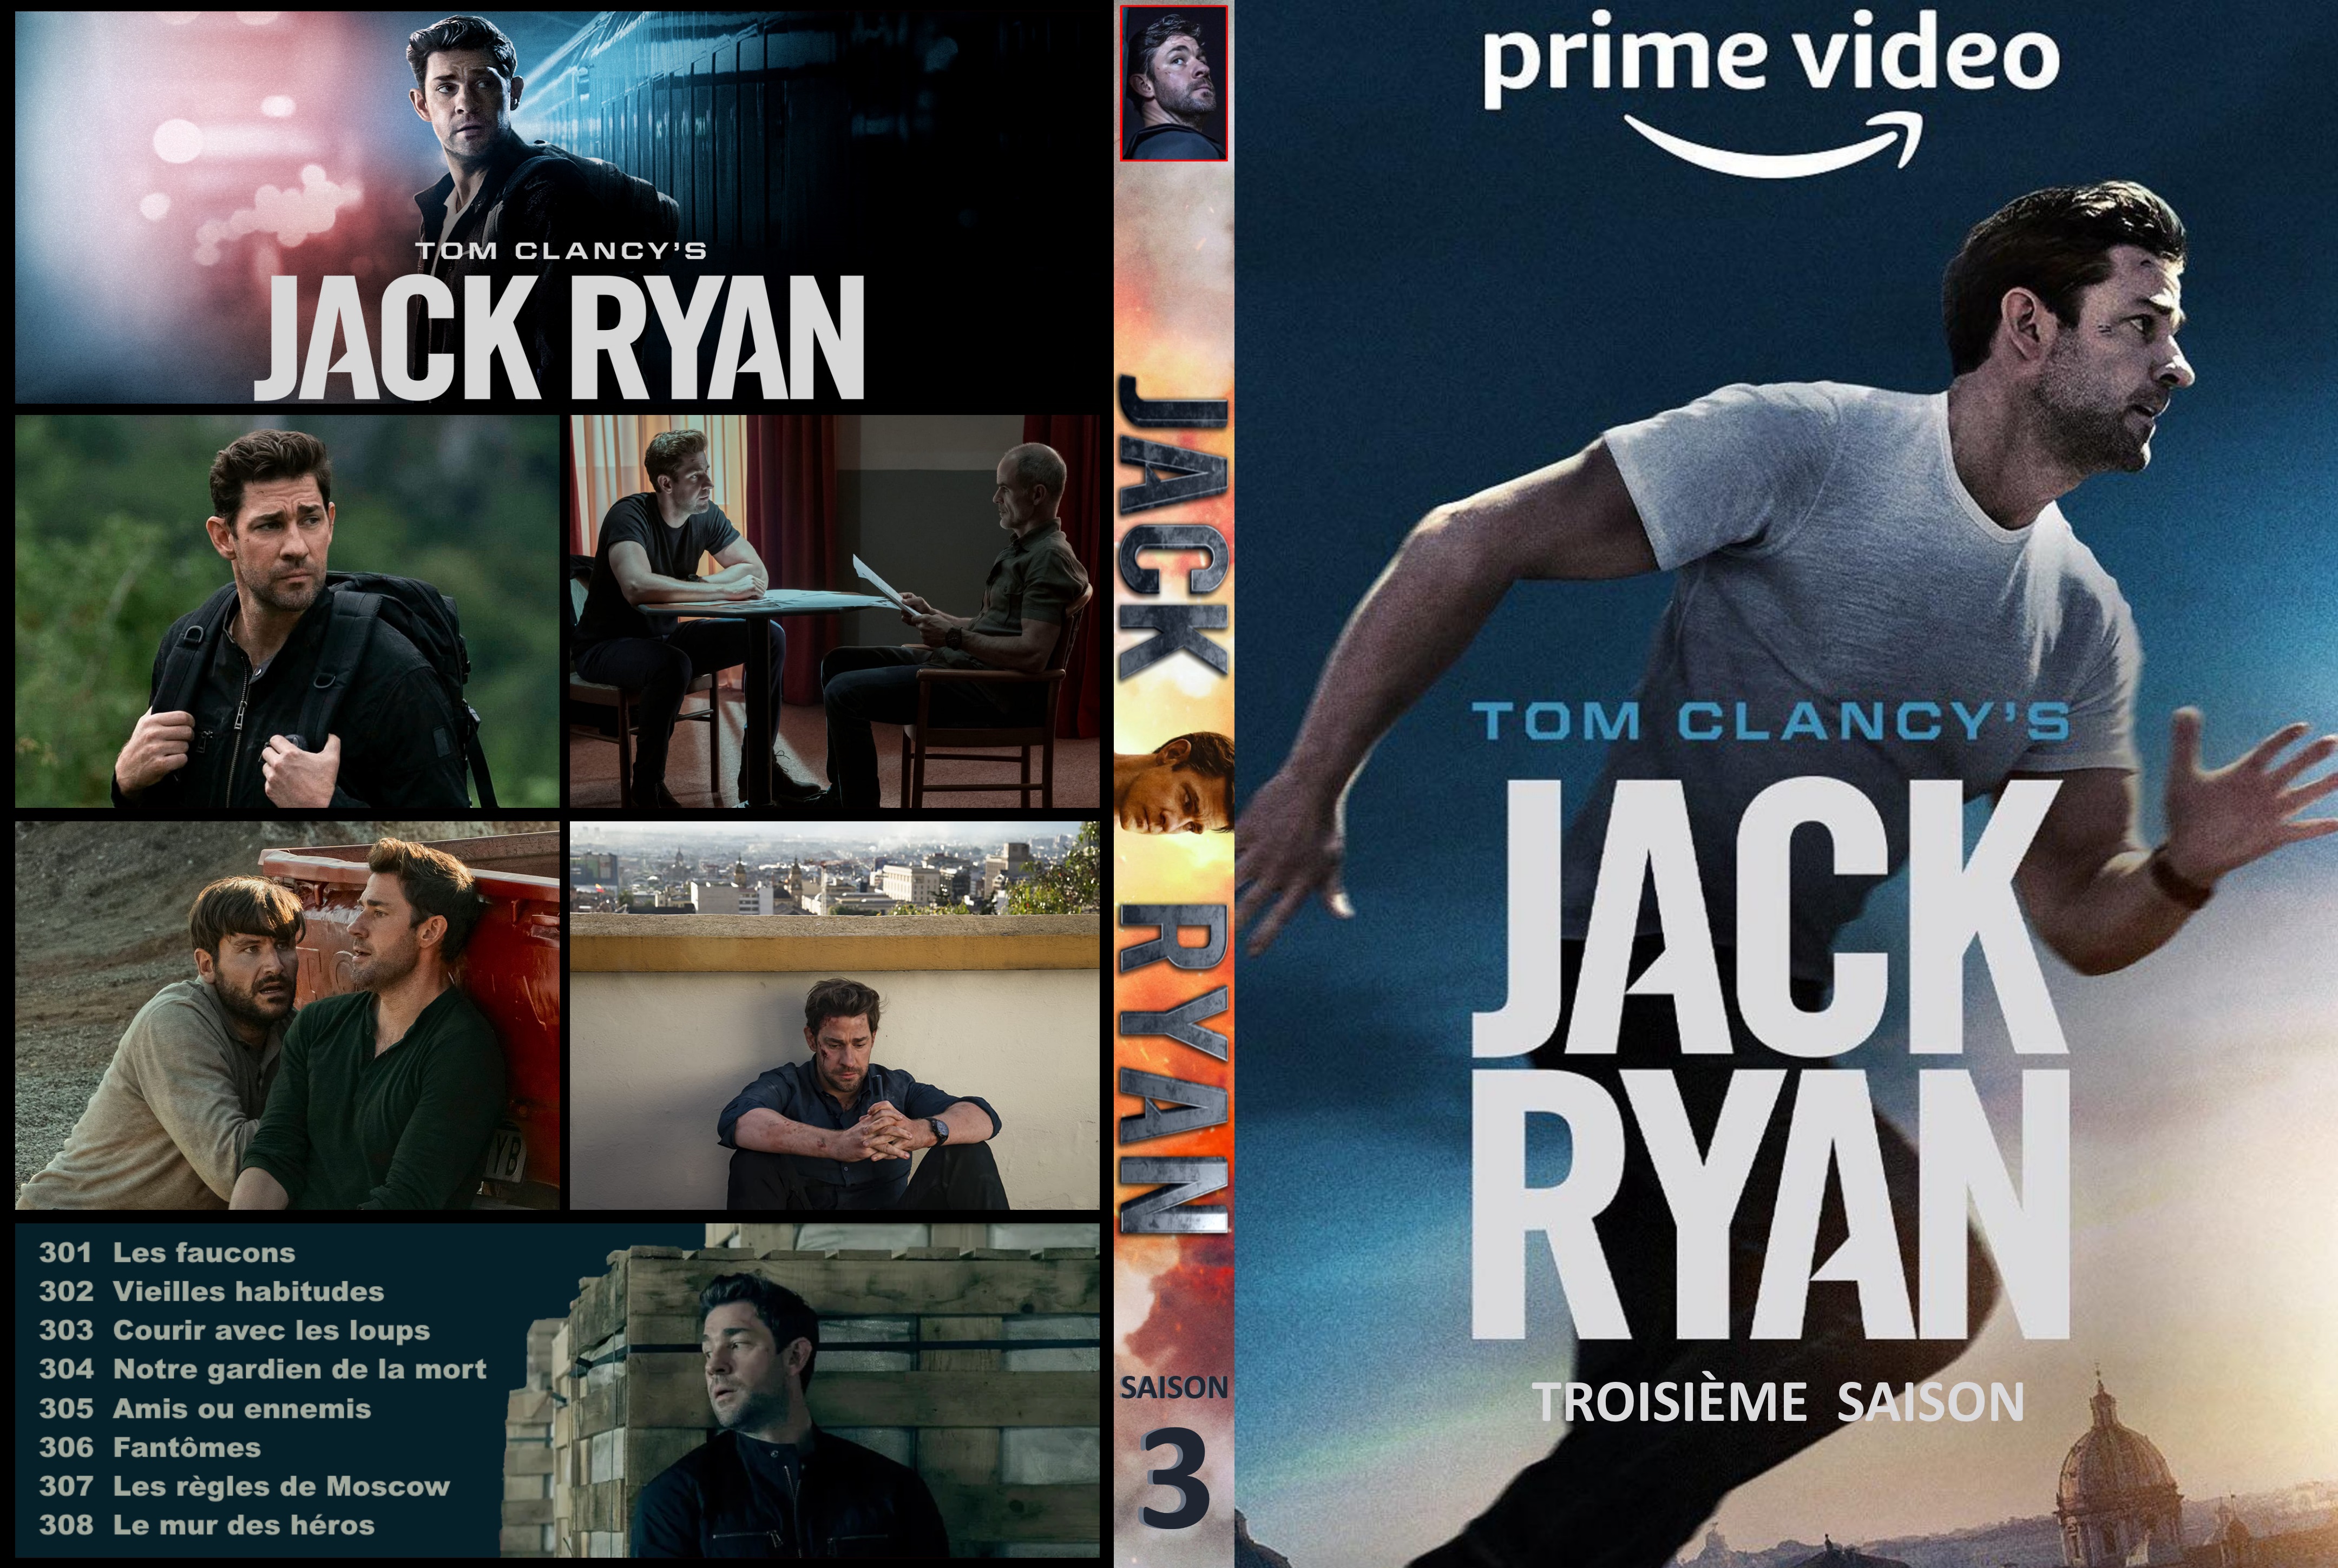 Jaquette DVD Jack Ryan saison 3 custom